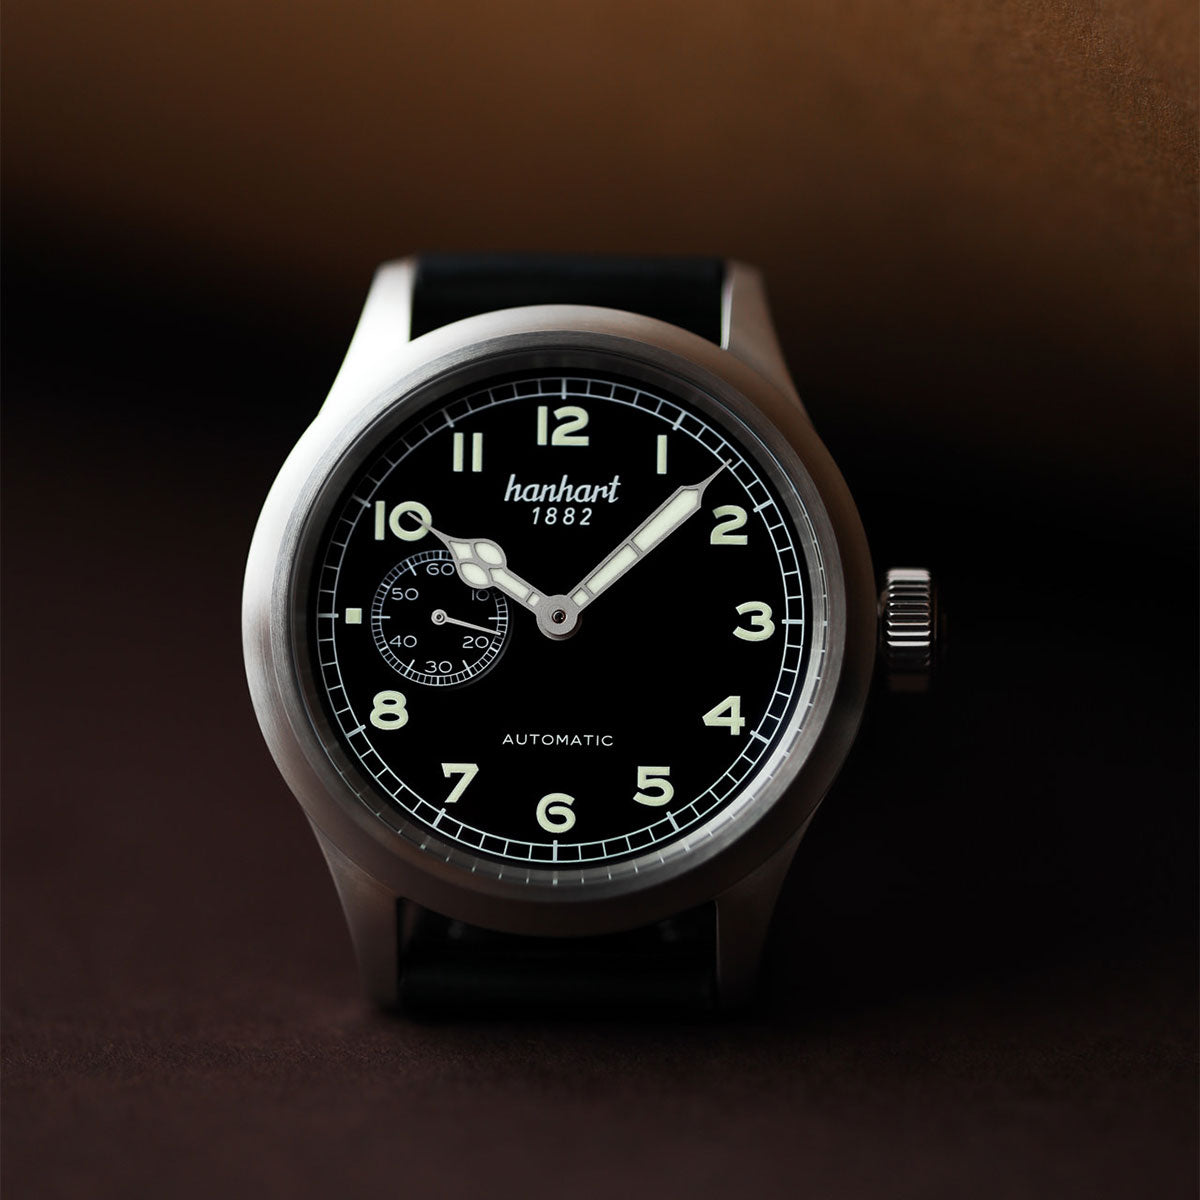 Hanhart 1882 watch - PIoneer Preventor9 black dial